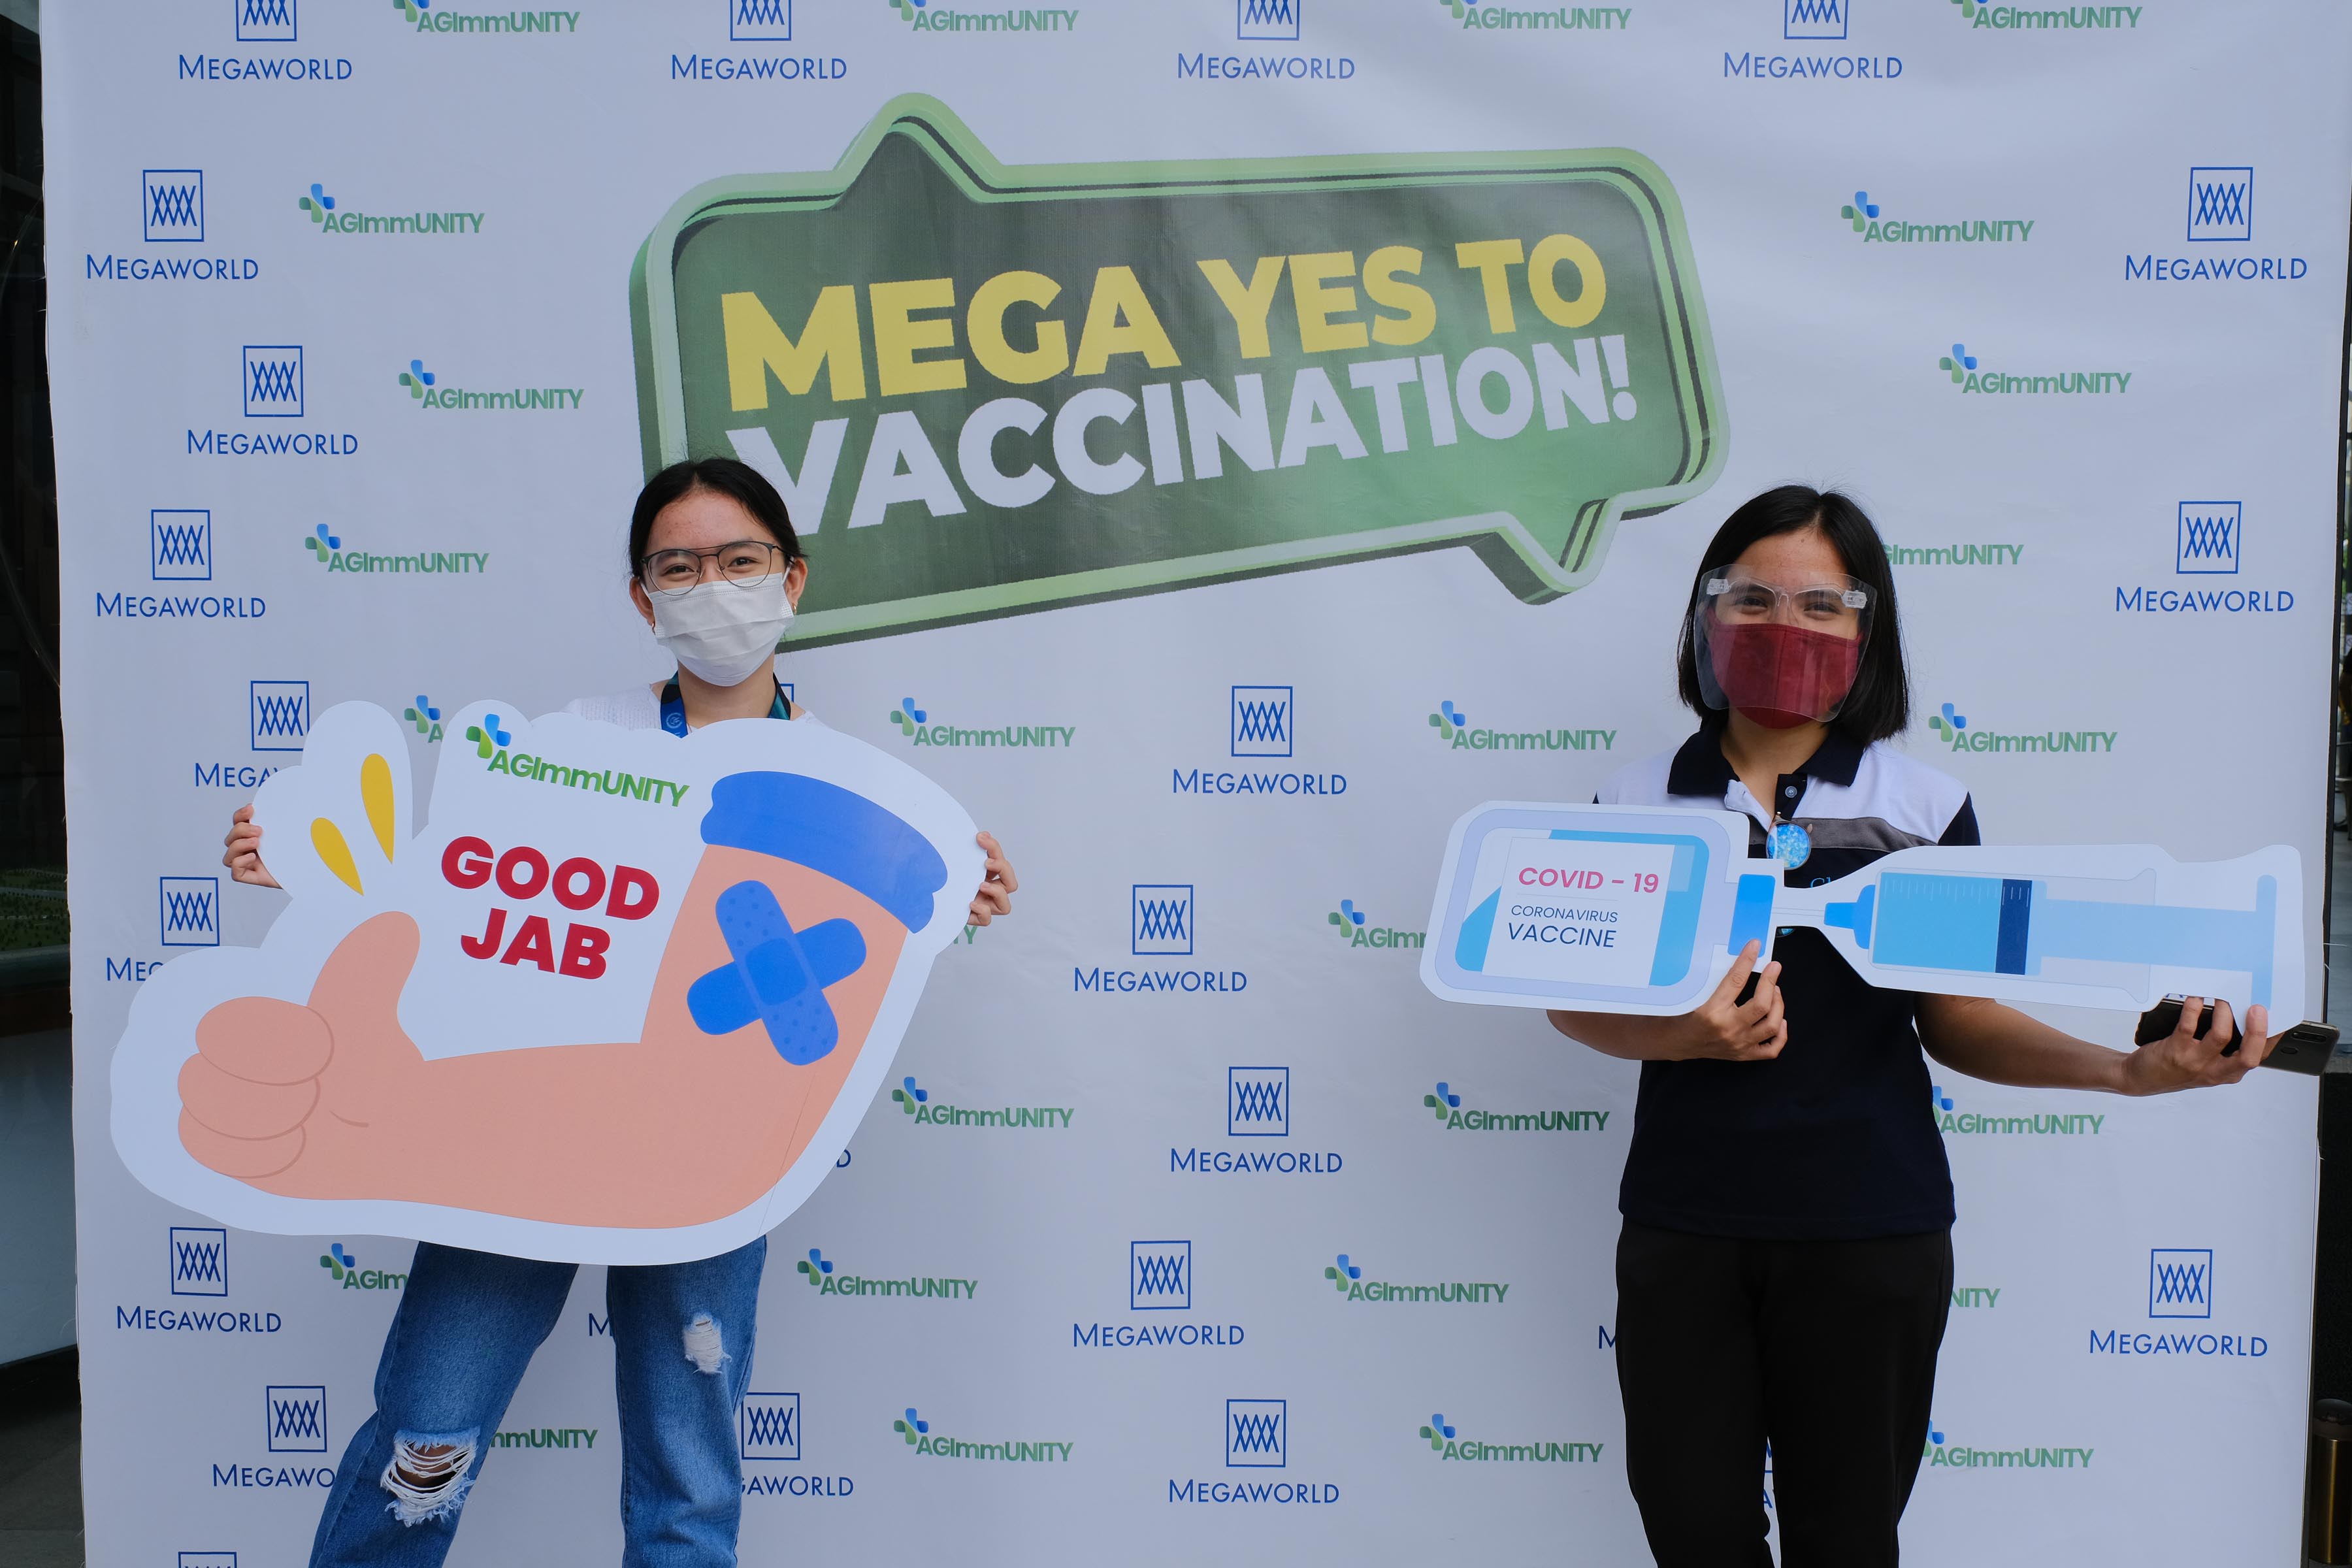 Megaworld vaccination